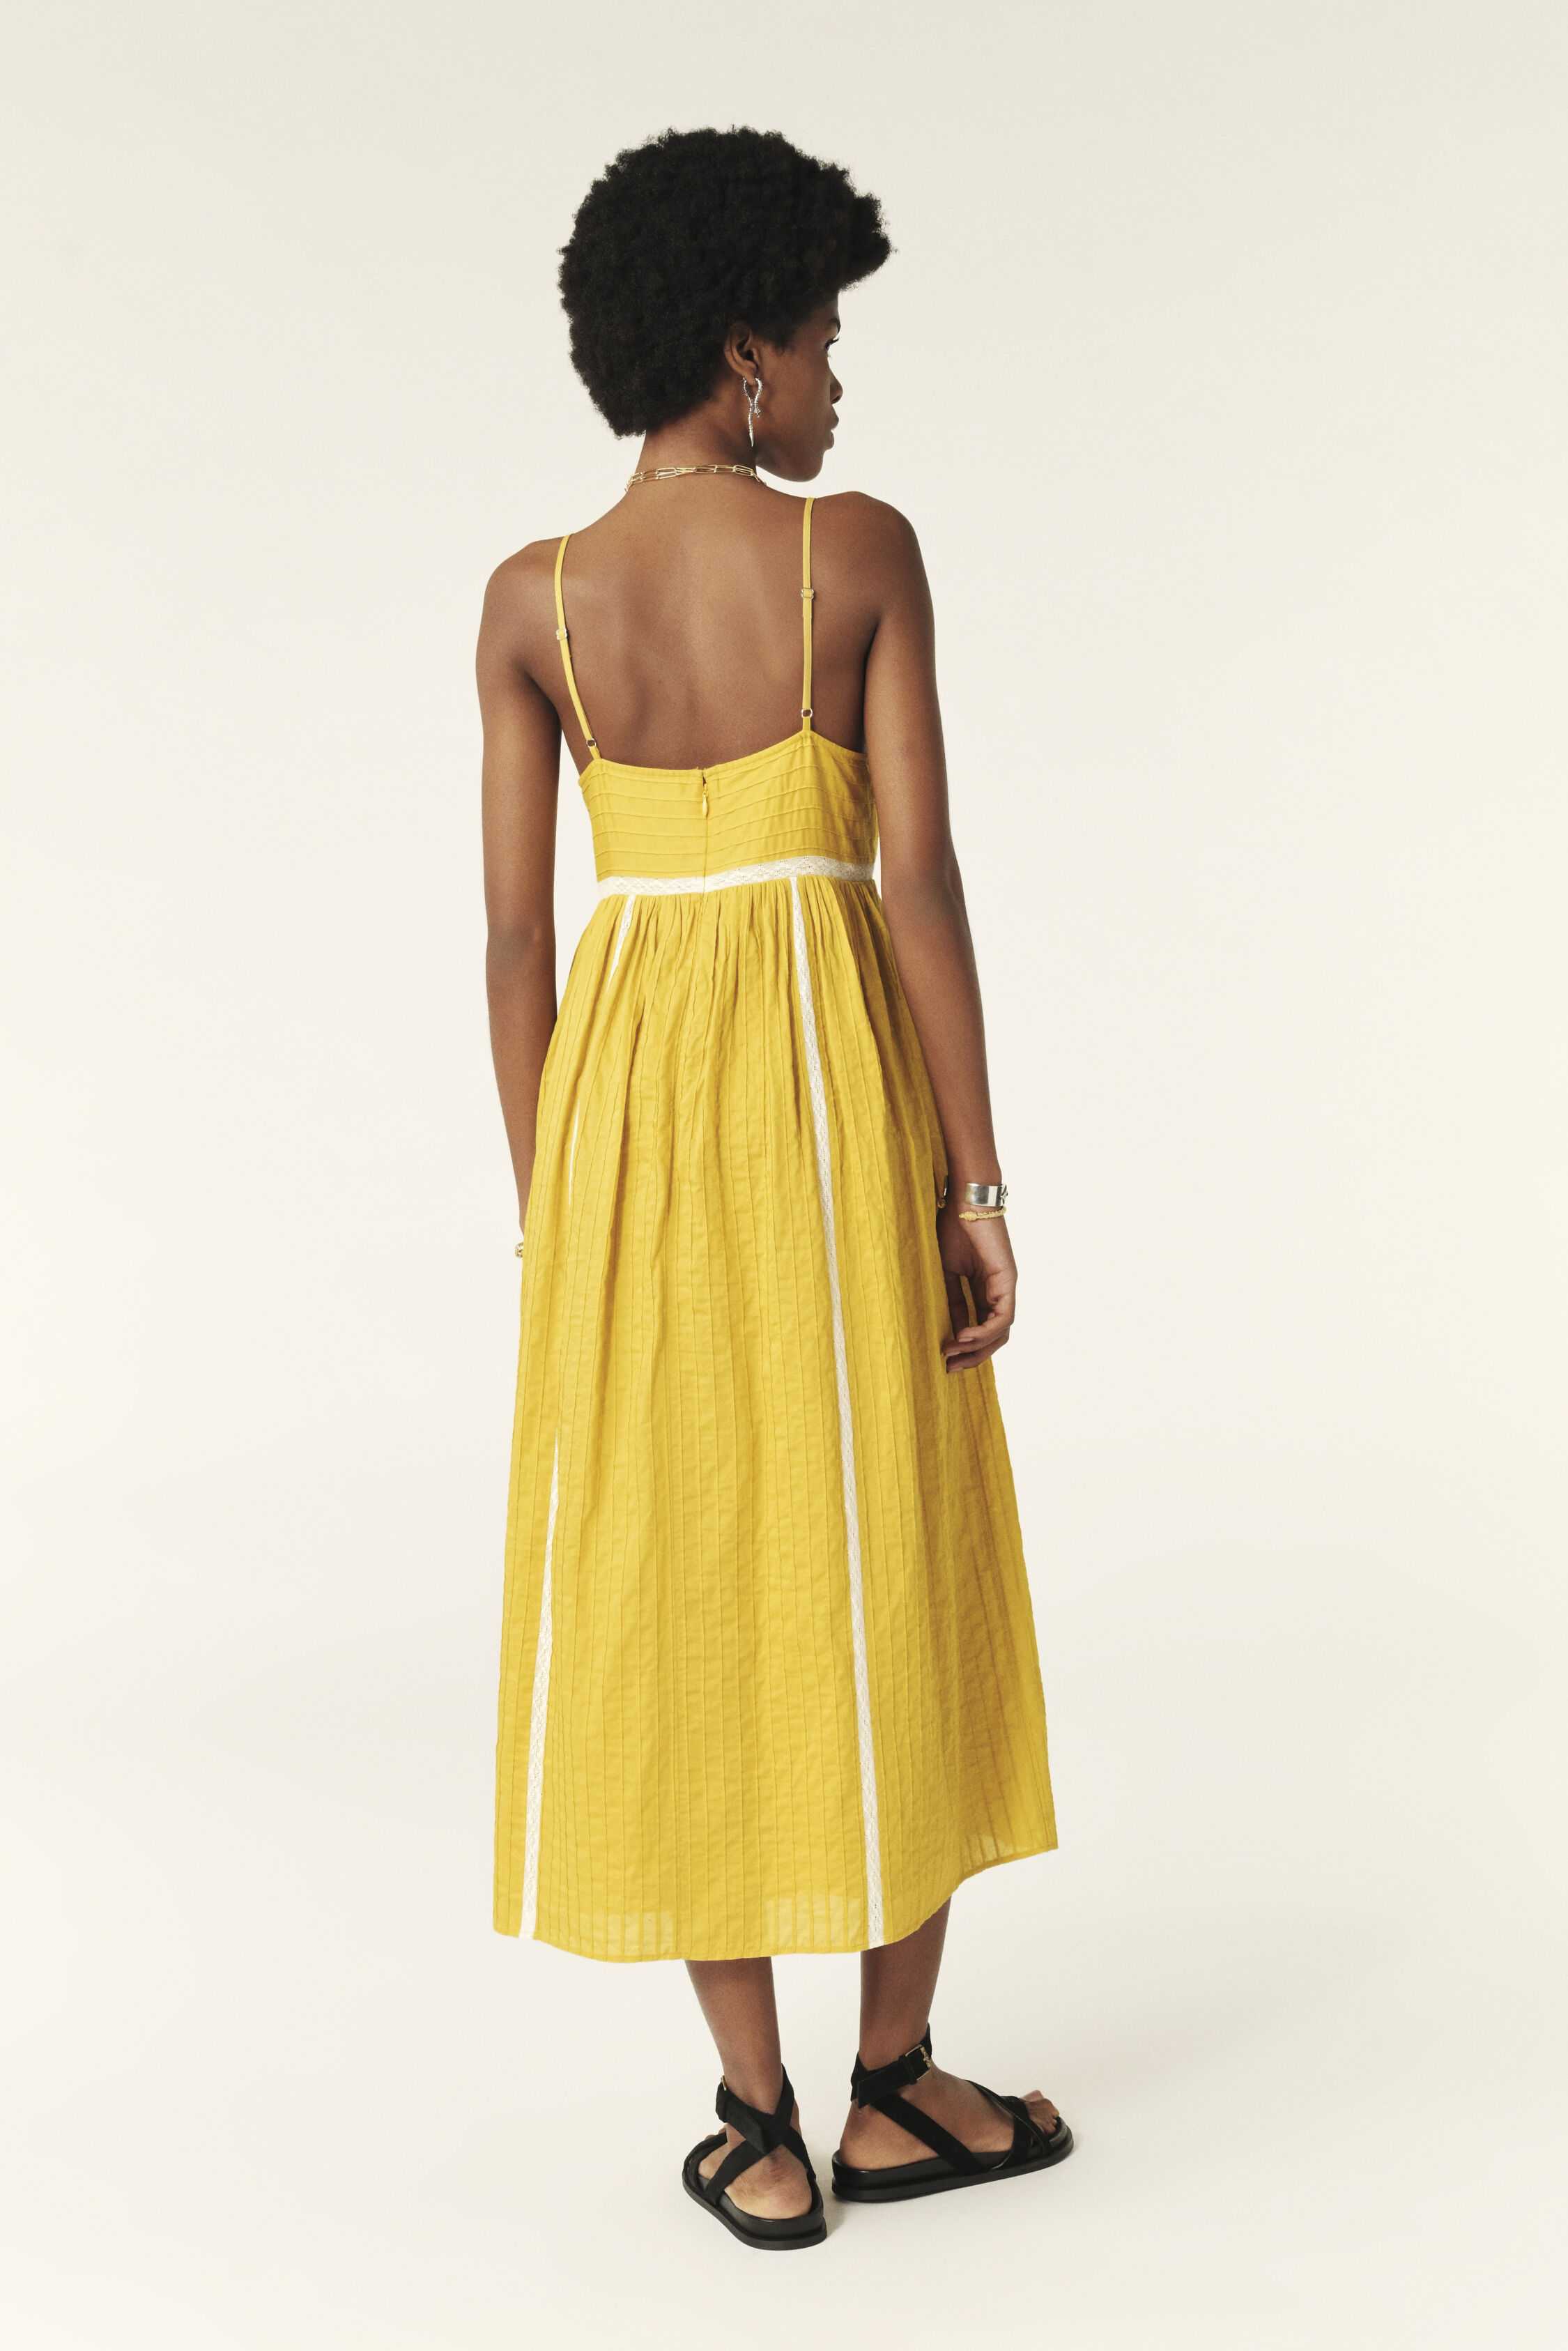 Midi Dresses - Printed, Cut-Out, Fitted Dresses | ba&sh UK